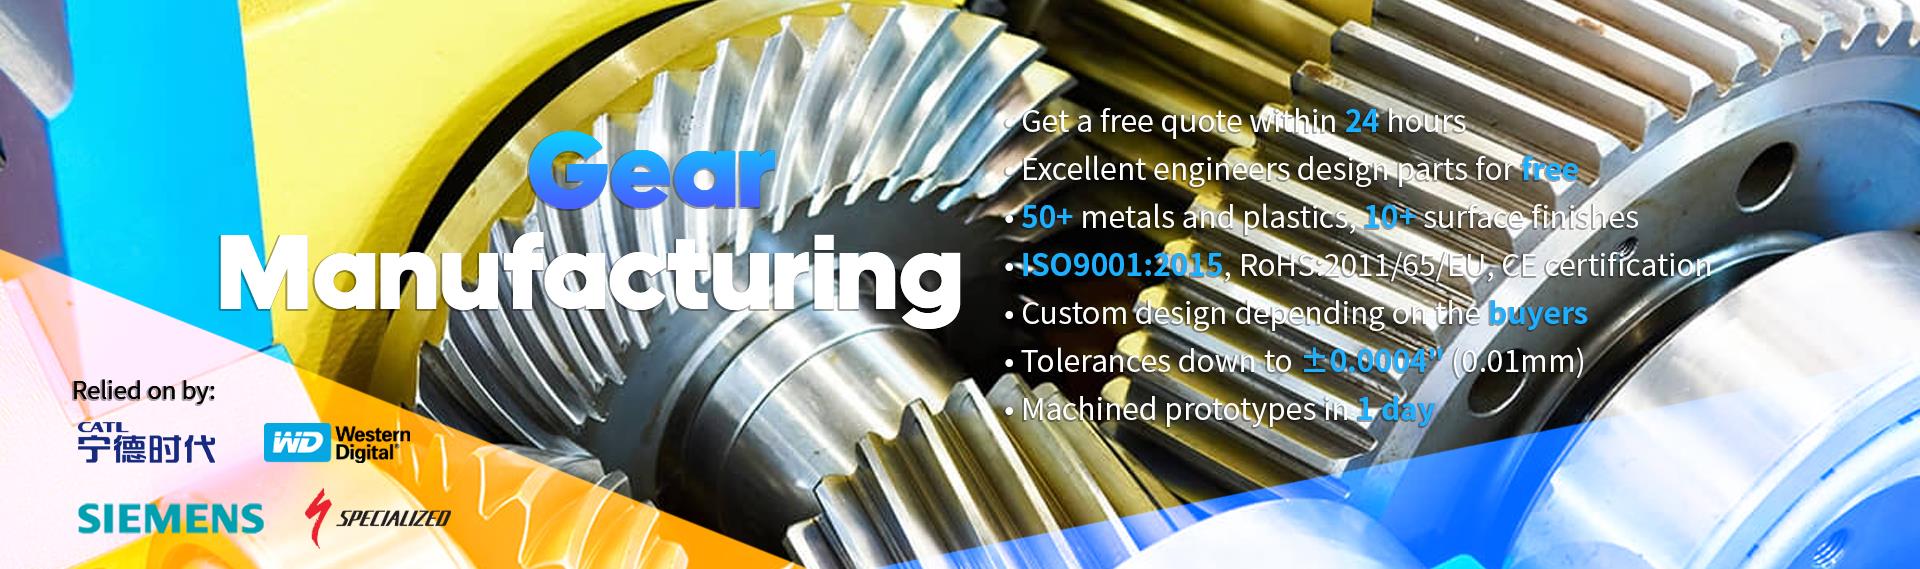 machining-gear-manufacturing